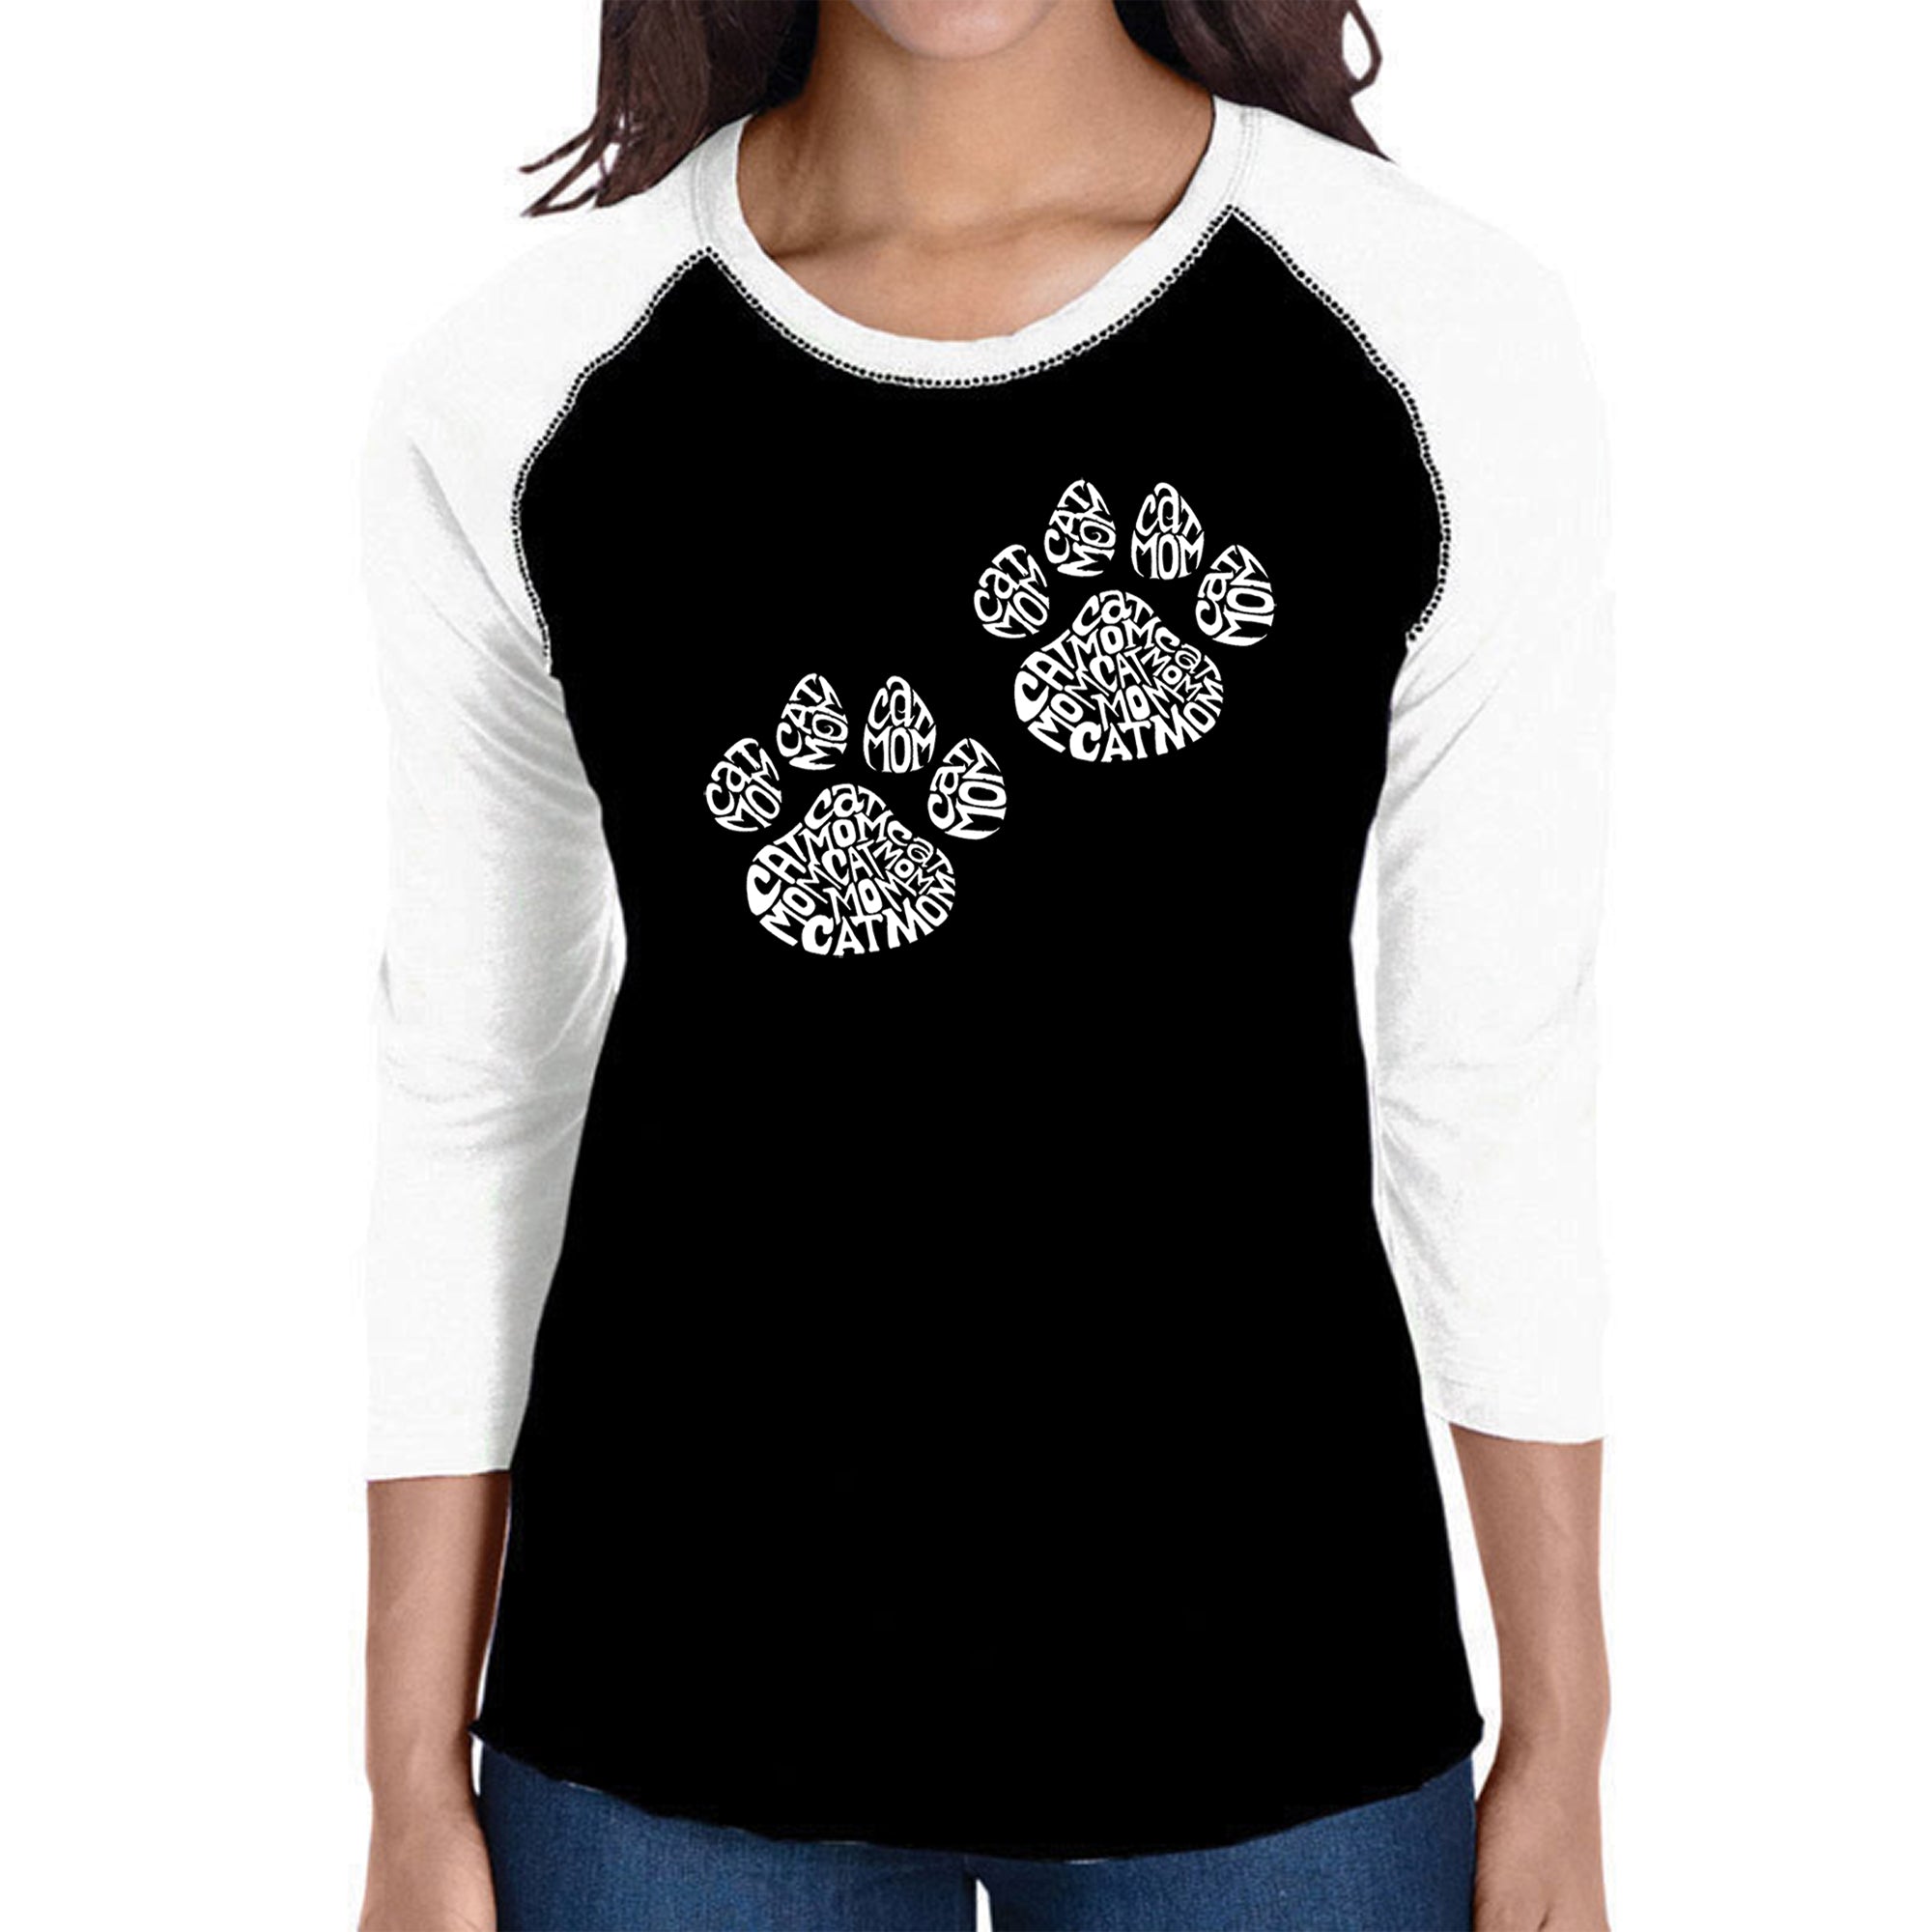 Cat Mom - Women's Raglan Baseball Word Art T-Shirt - Black/White - X-Large